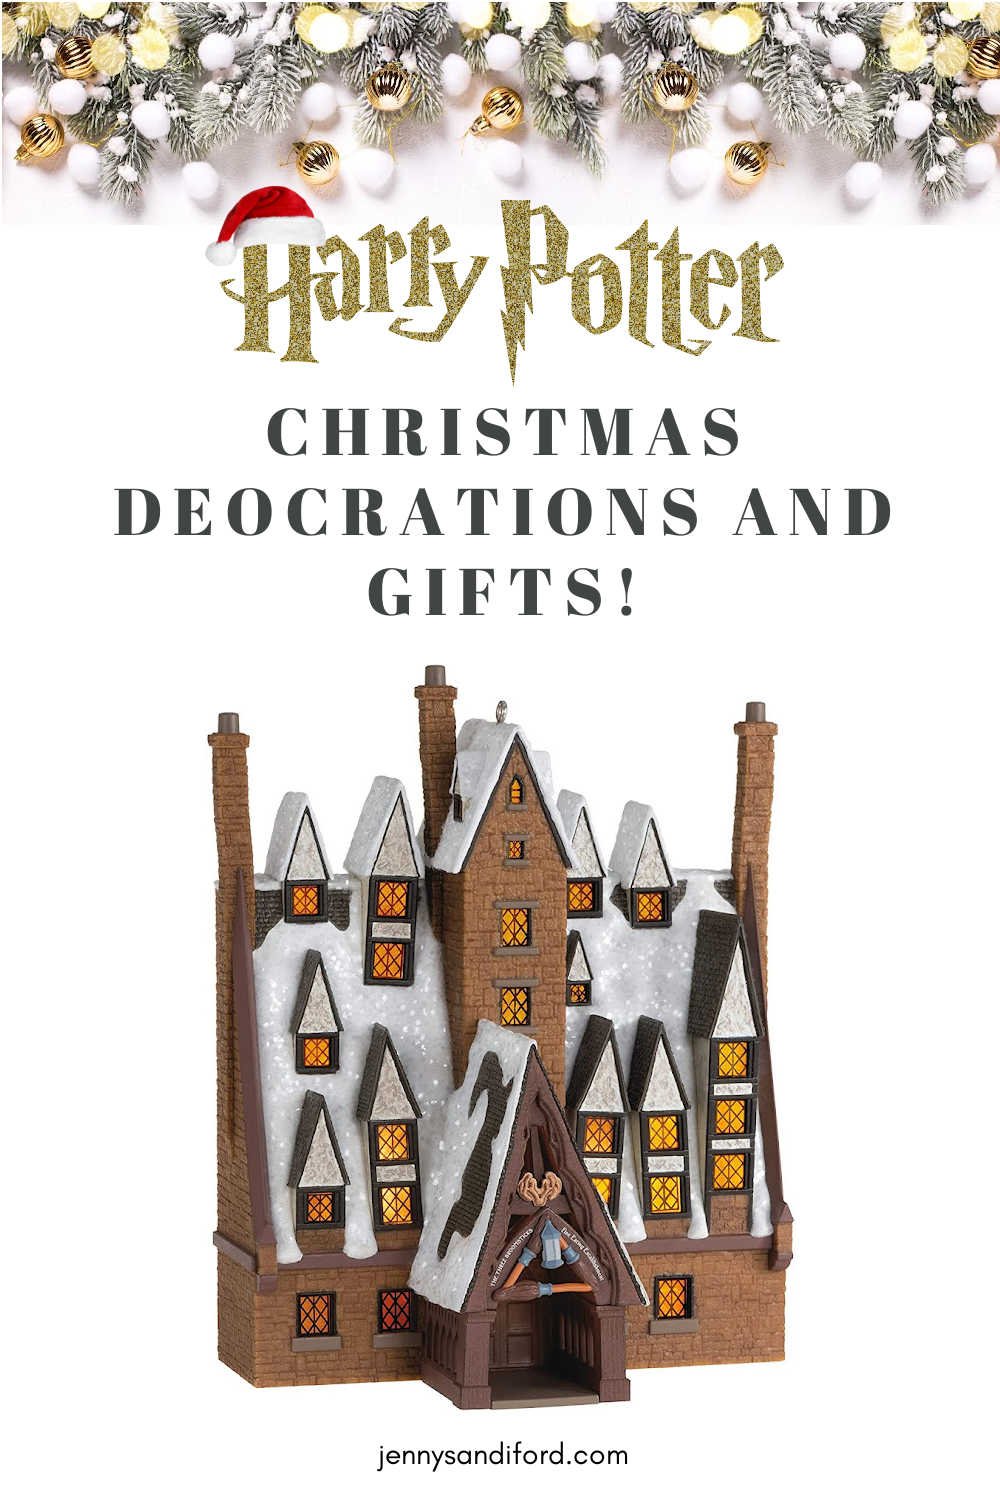 Harry Potter Movies Decor Ideas - Hogwarts At Christmas